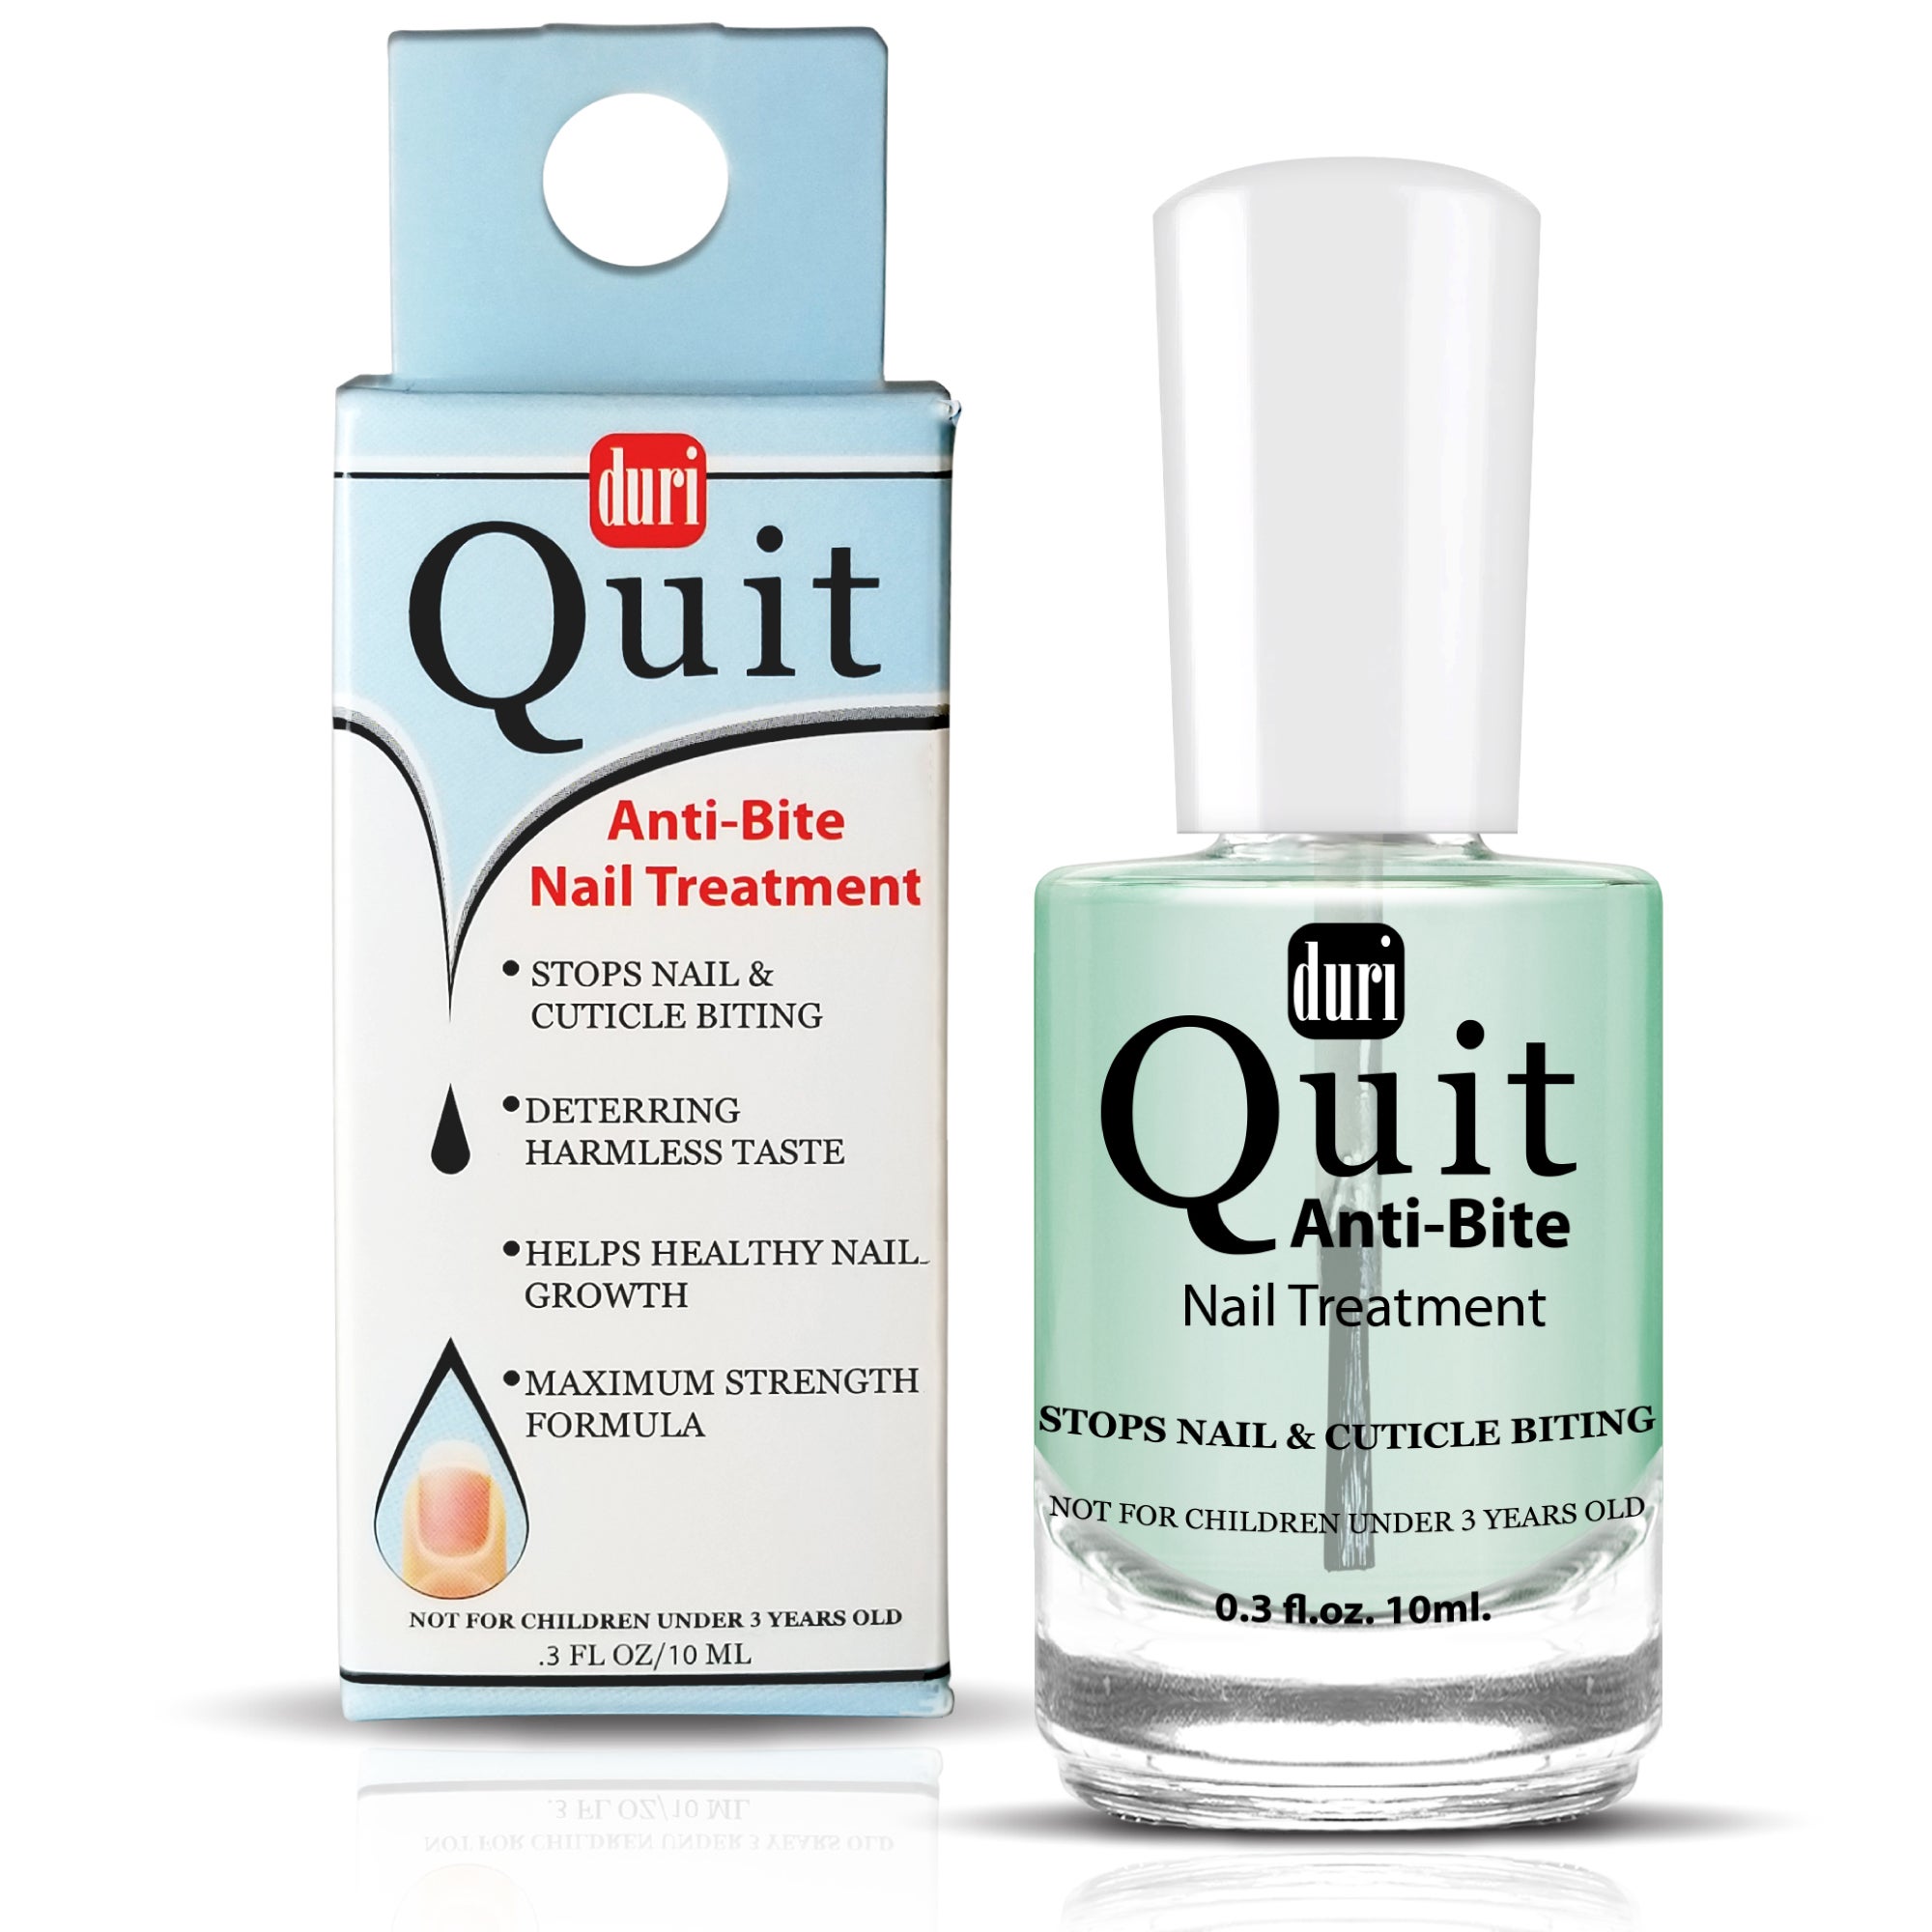 Duri + Quit Anti-Bite Nail Treatment